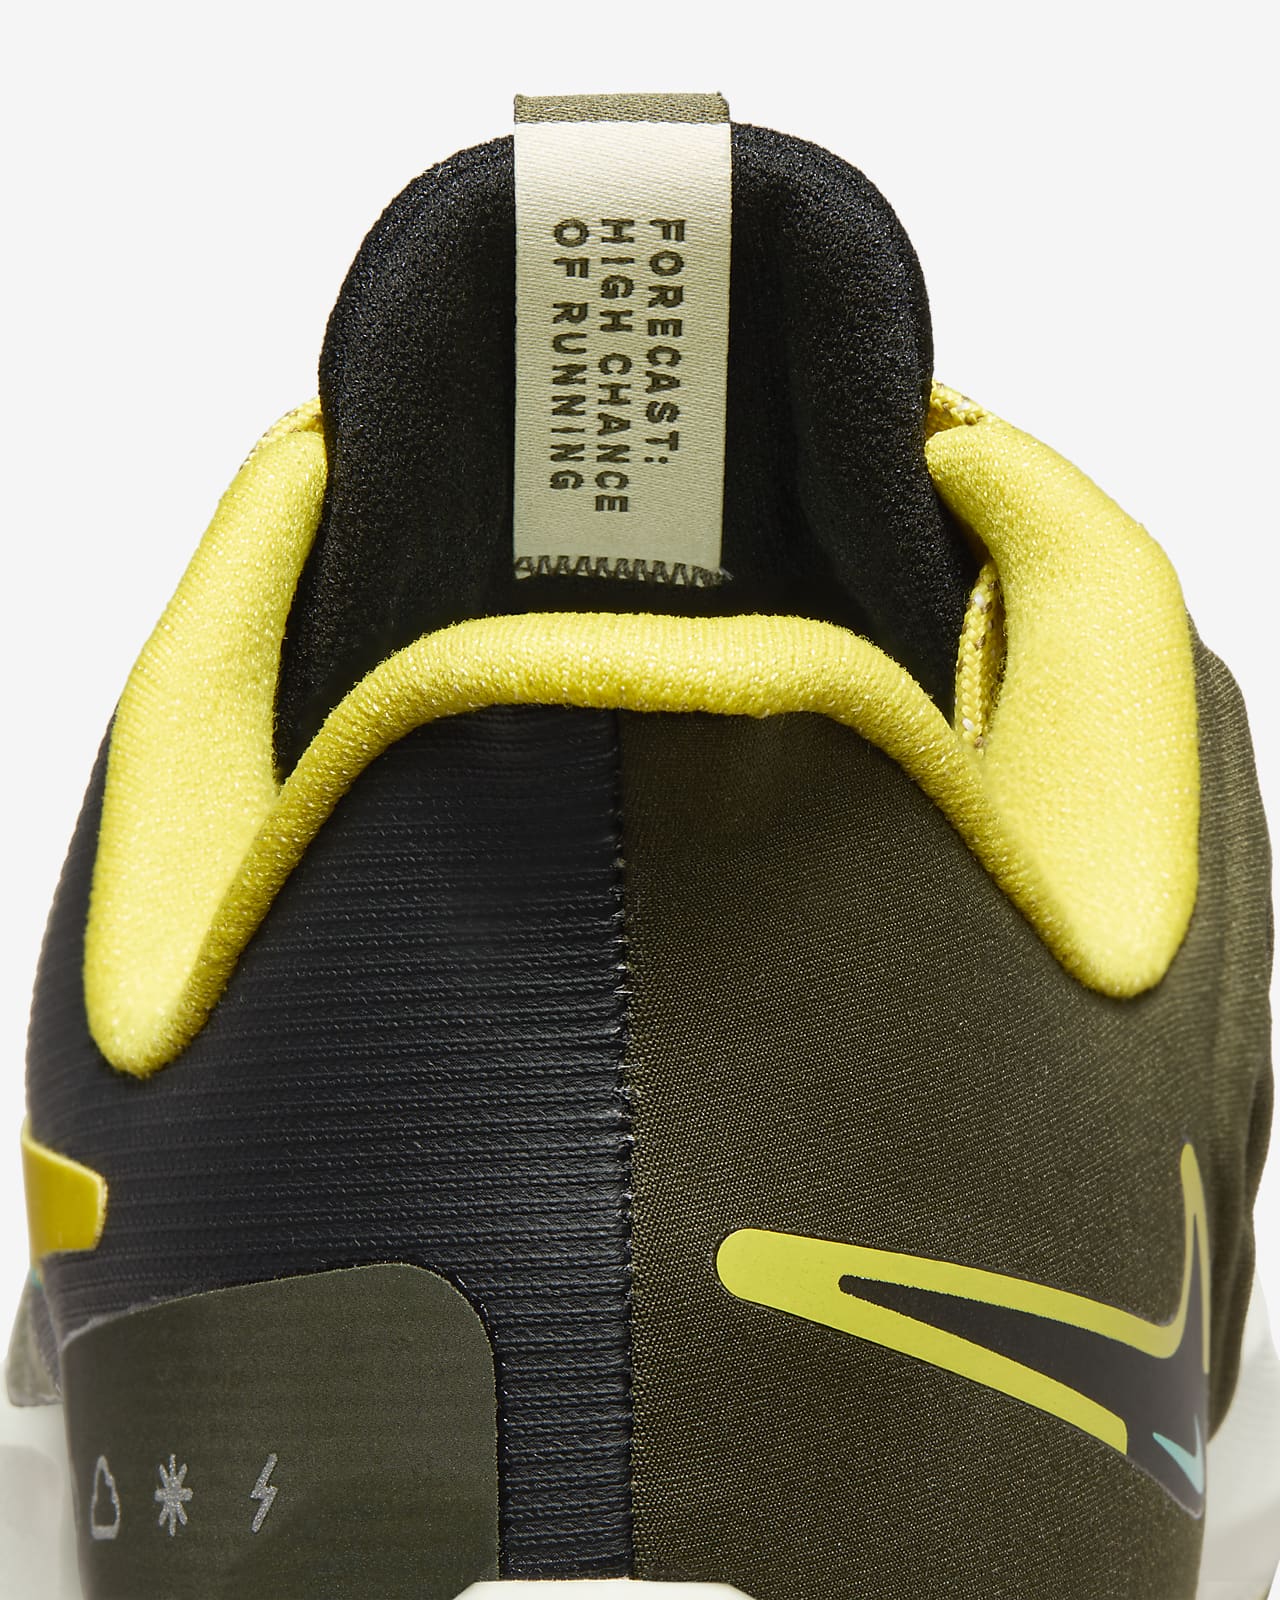 Nike Pegasus 39 Shield neoprene and rubber-trimmed mesh sneakers